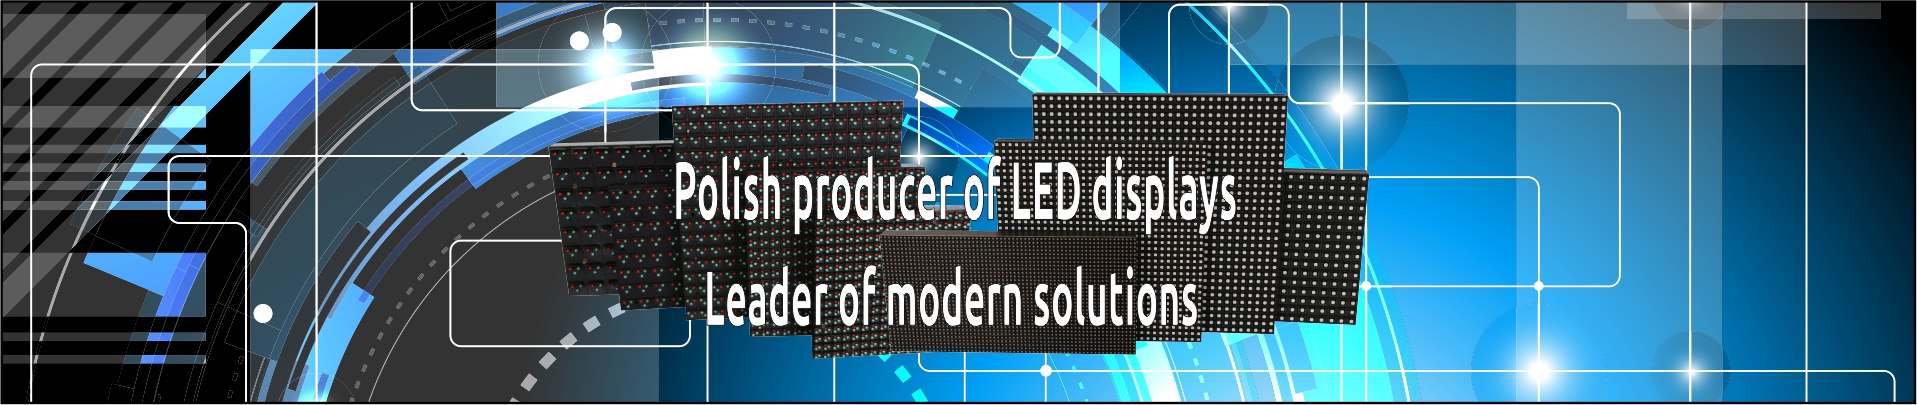 Ledtechnology_Sport LED perimeters